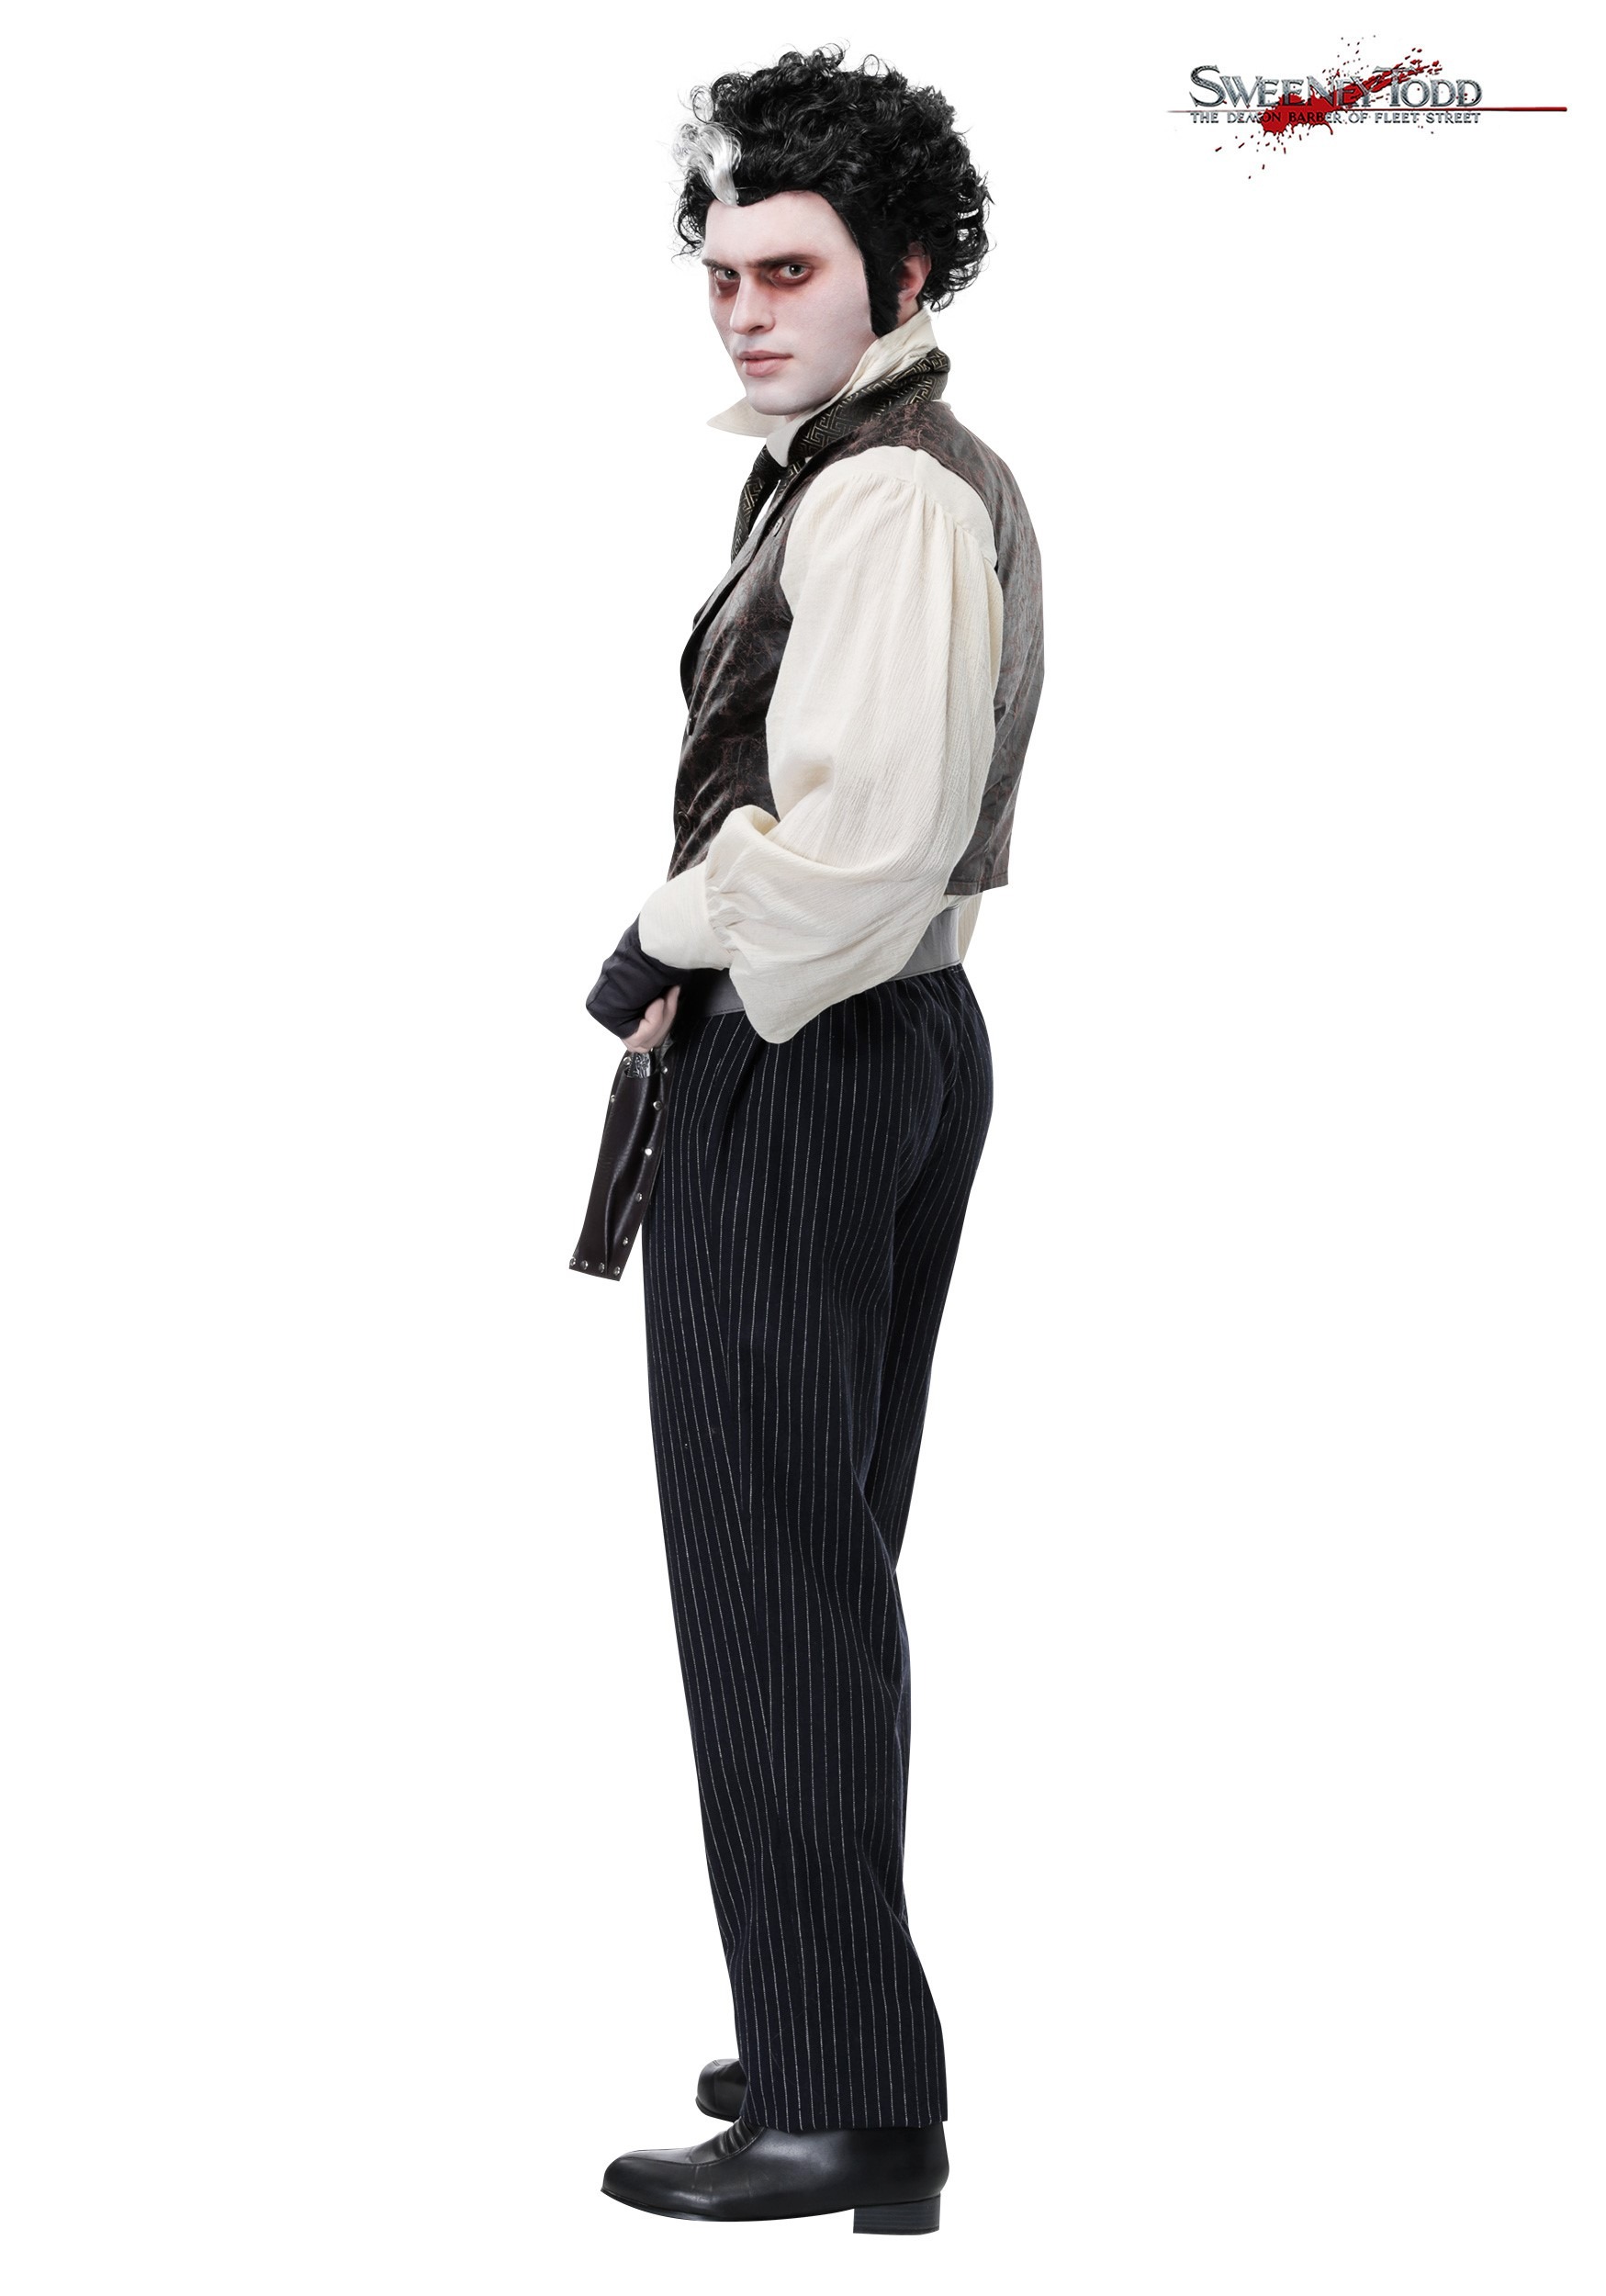 Sweeney Todd Costume For Men